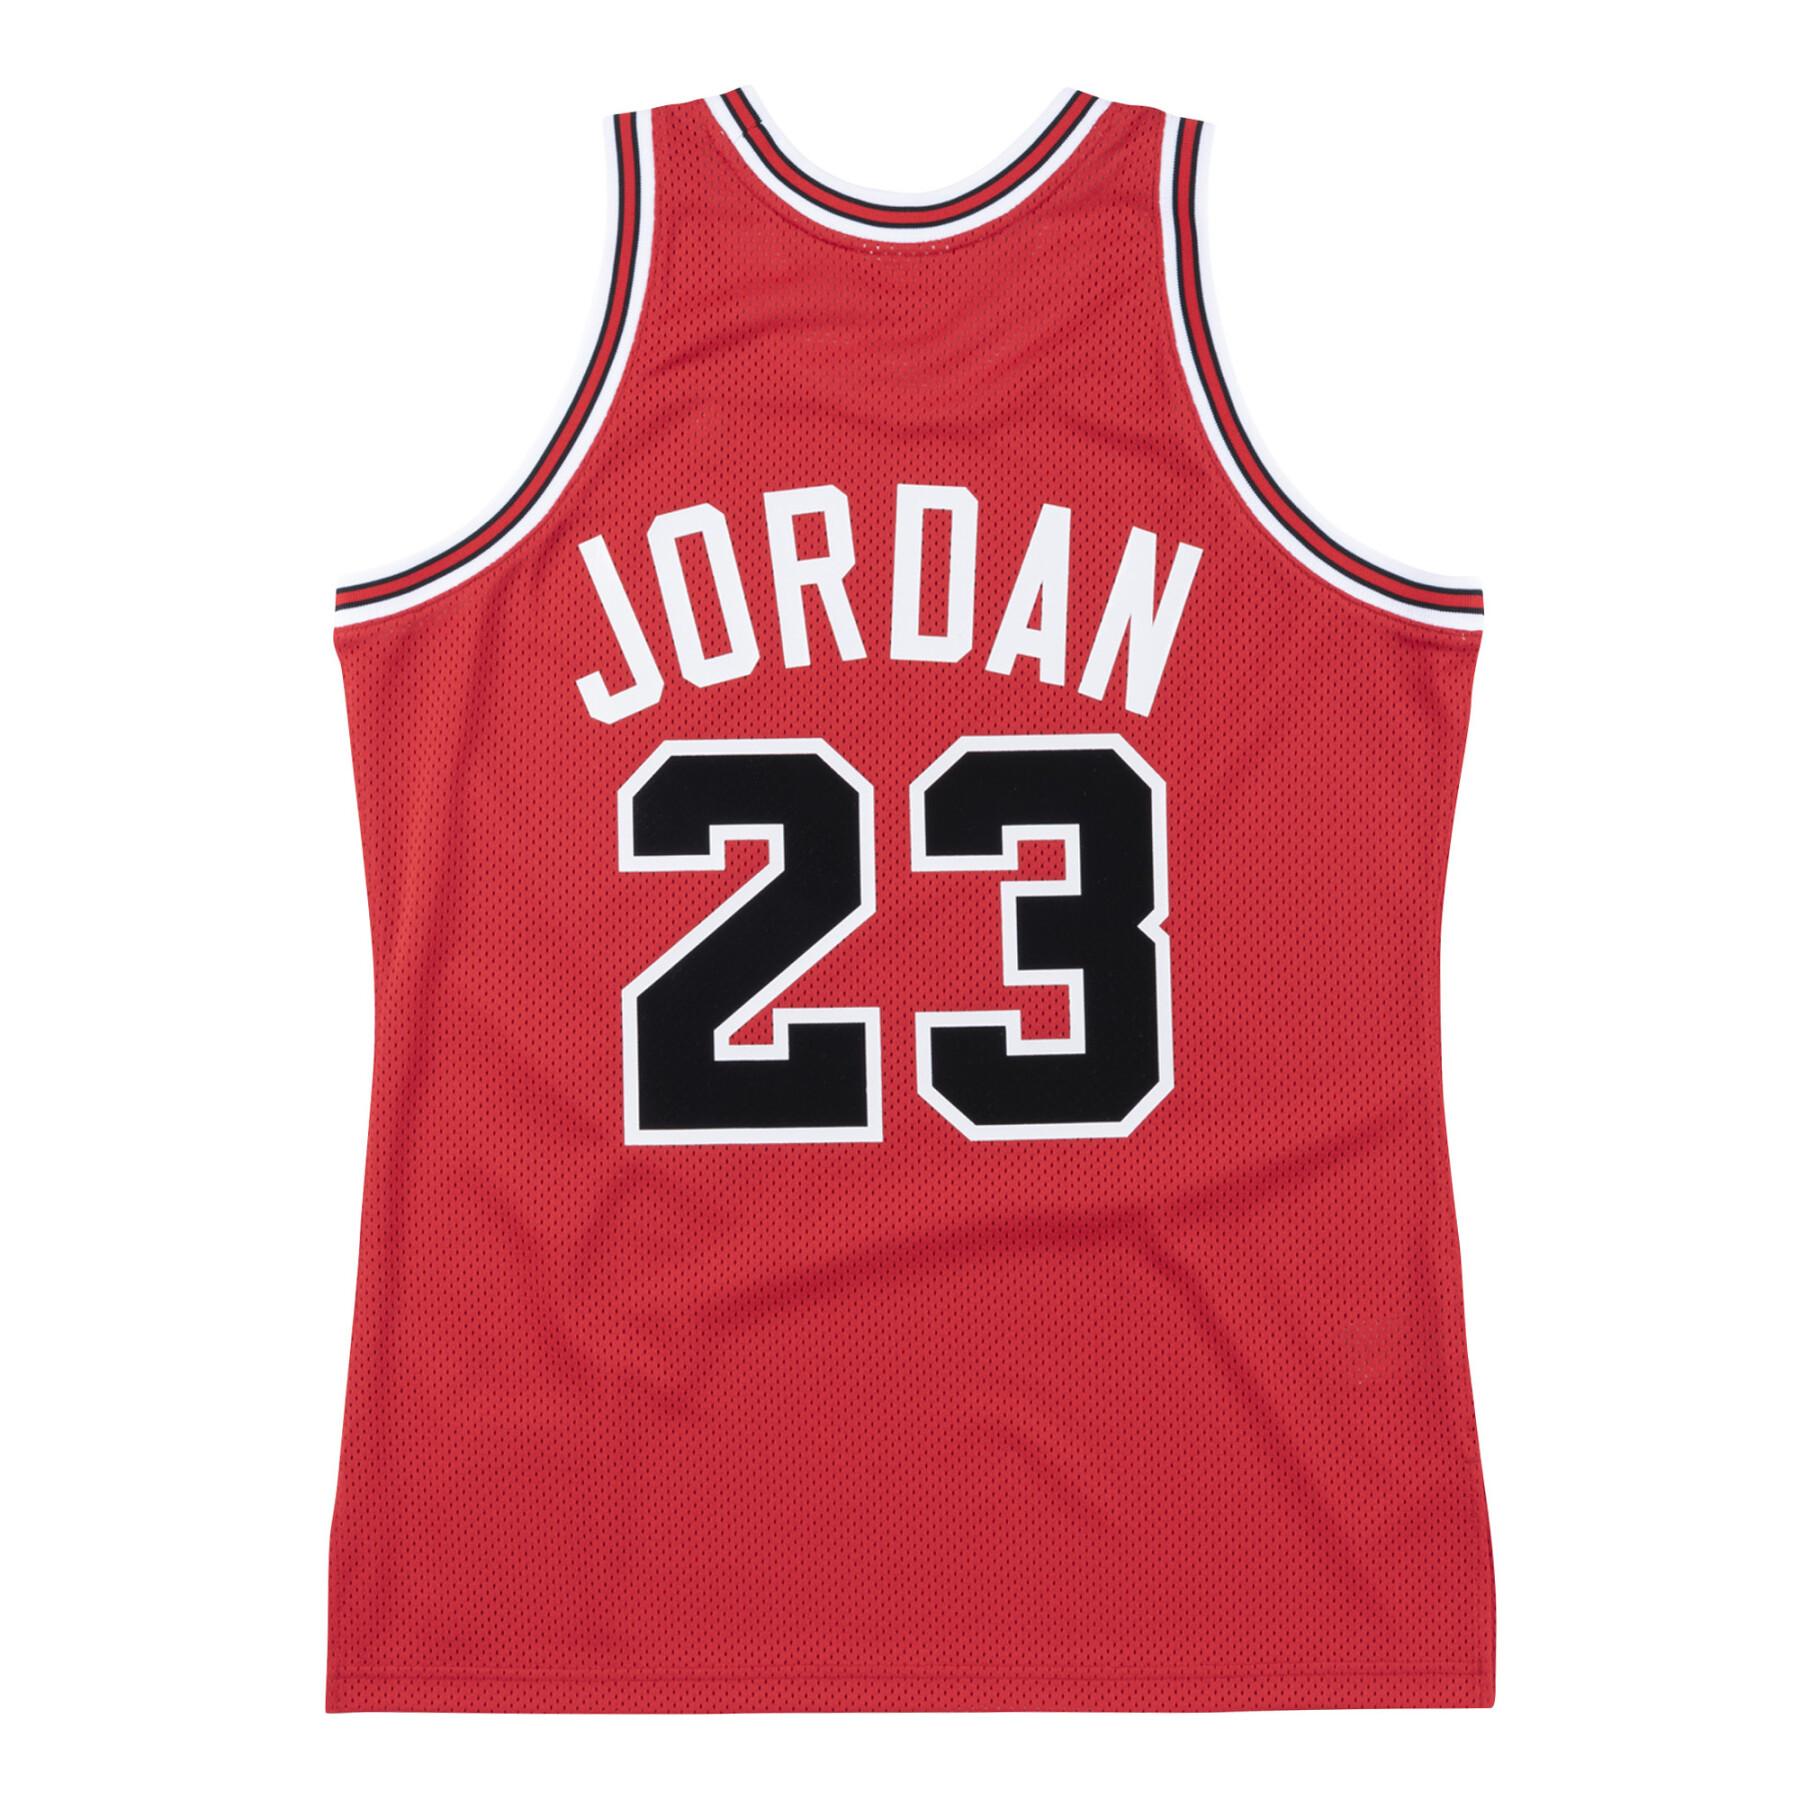 Maillot Chicago Bulls NBA Authentic 1987 Michael Jordan